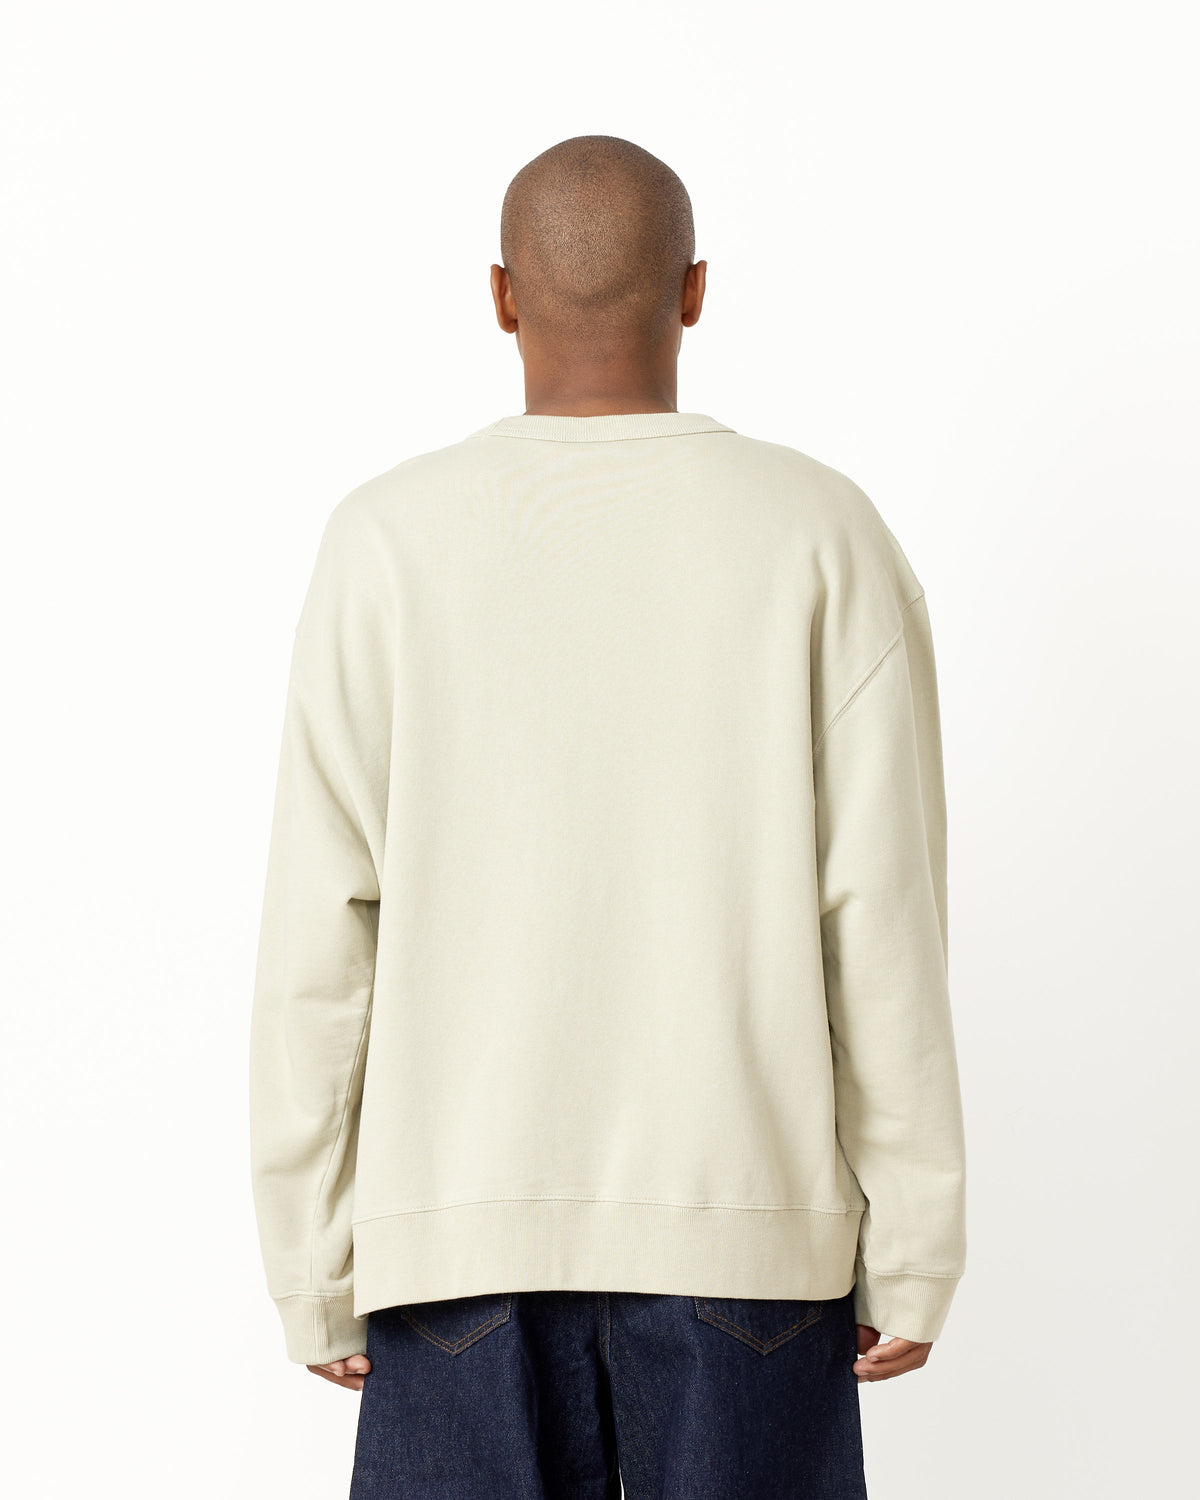 Overdyed Crewneck Sweater Dries Van Noten Shop for official